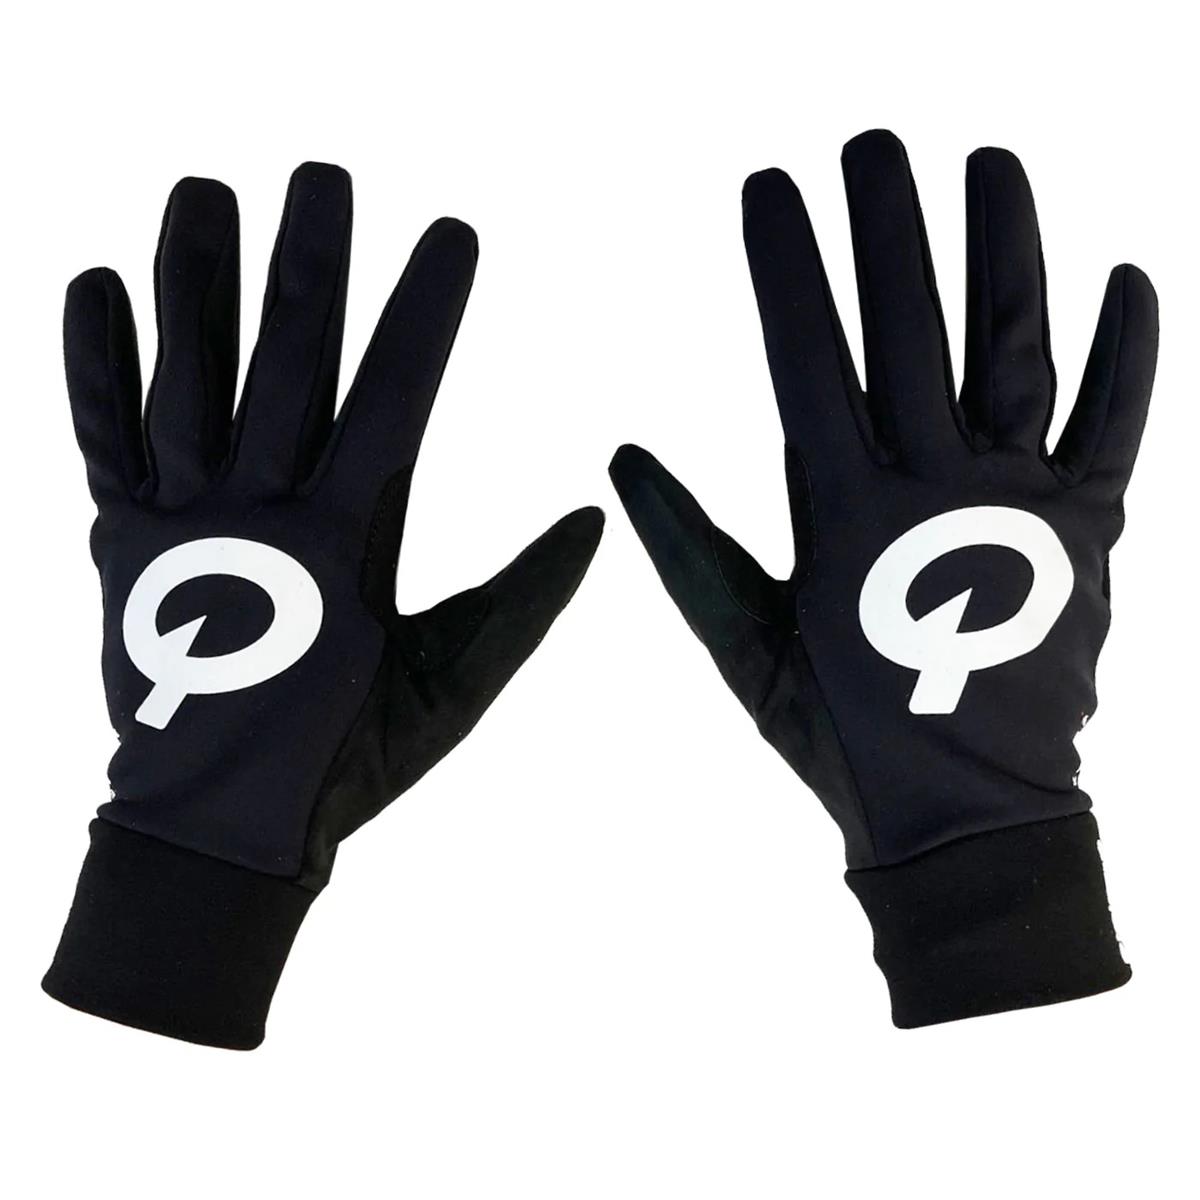 Kylma Long Finger Winter Gloves Black Size S